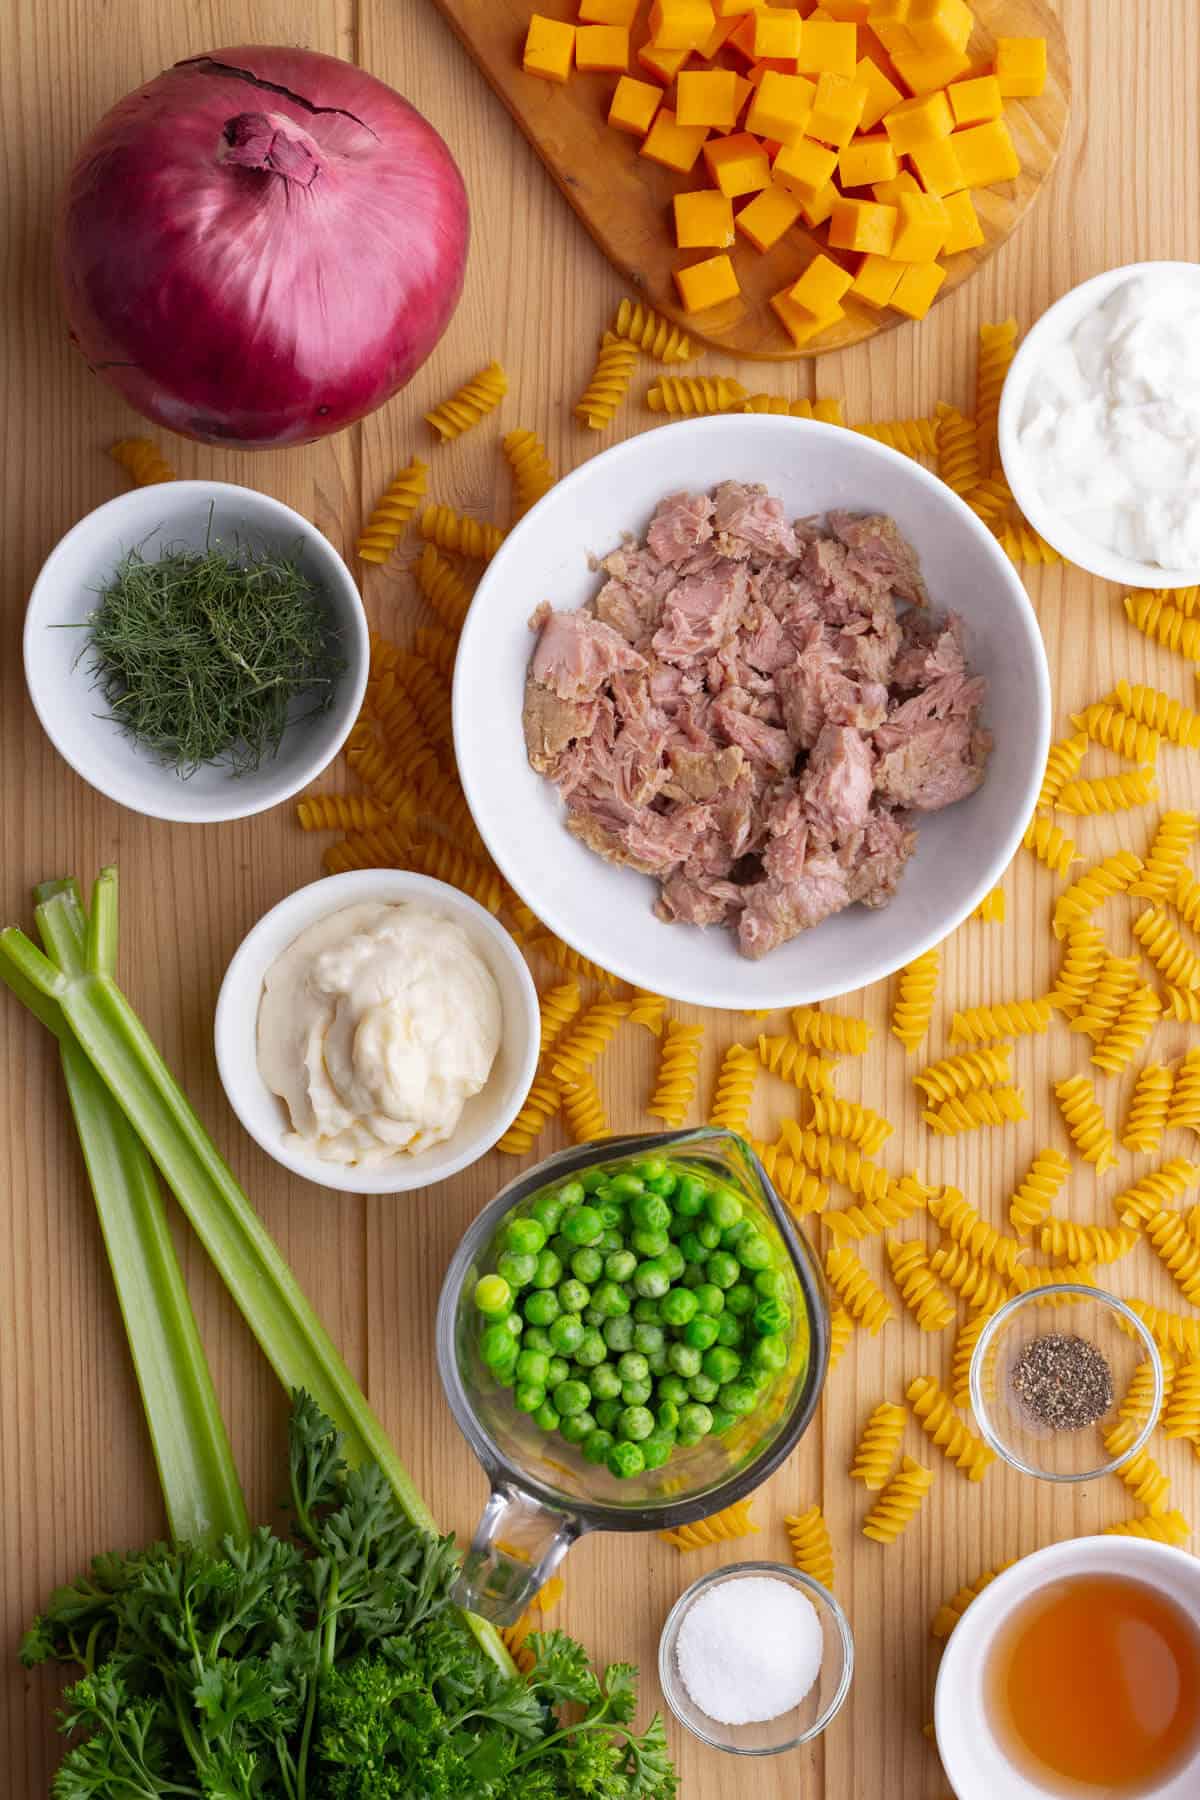 Ingredients used to make tuna pasta salad.